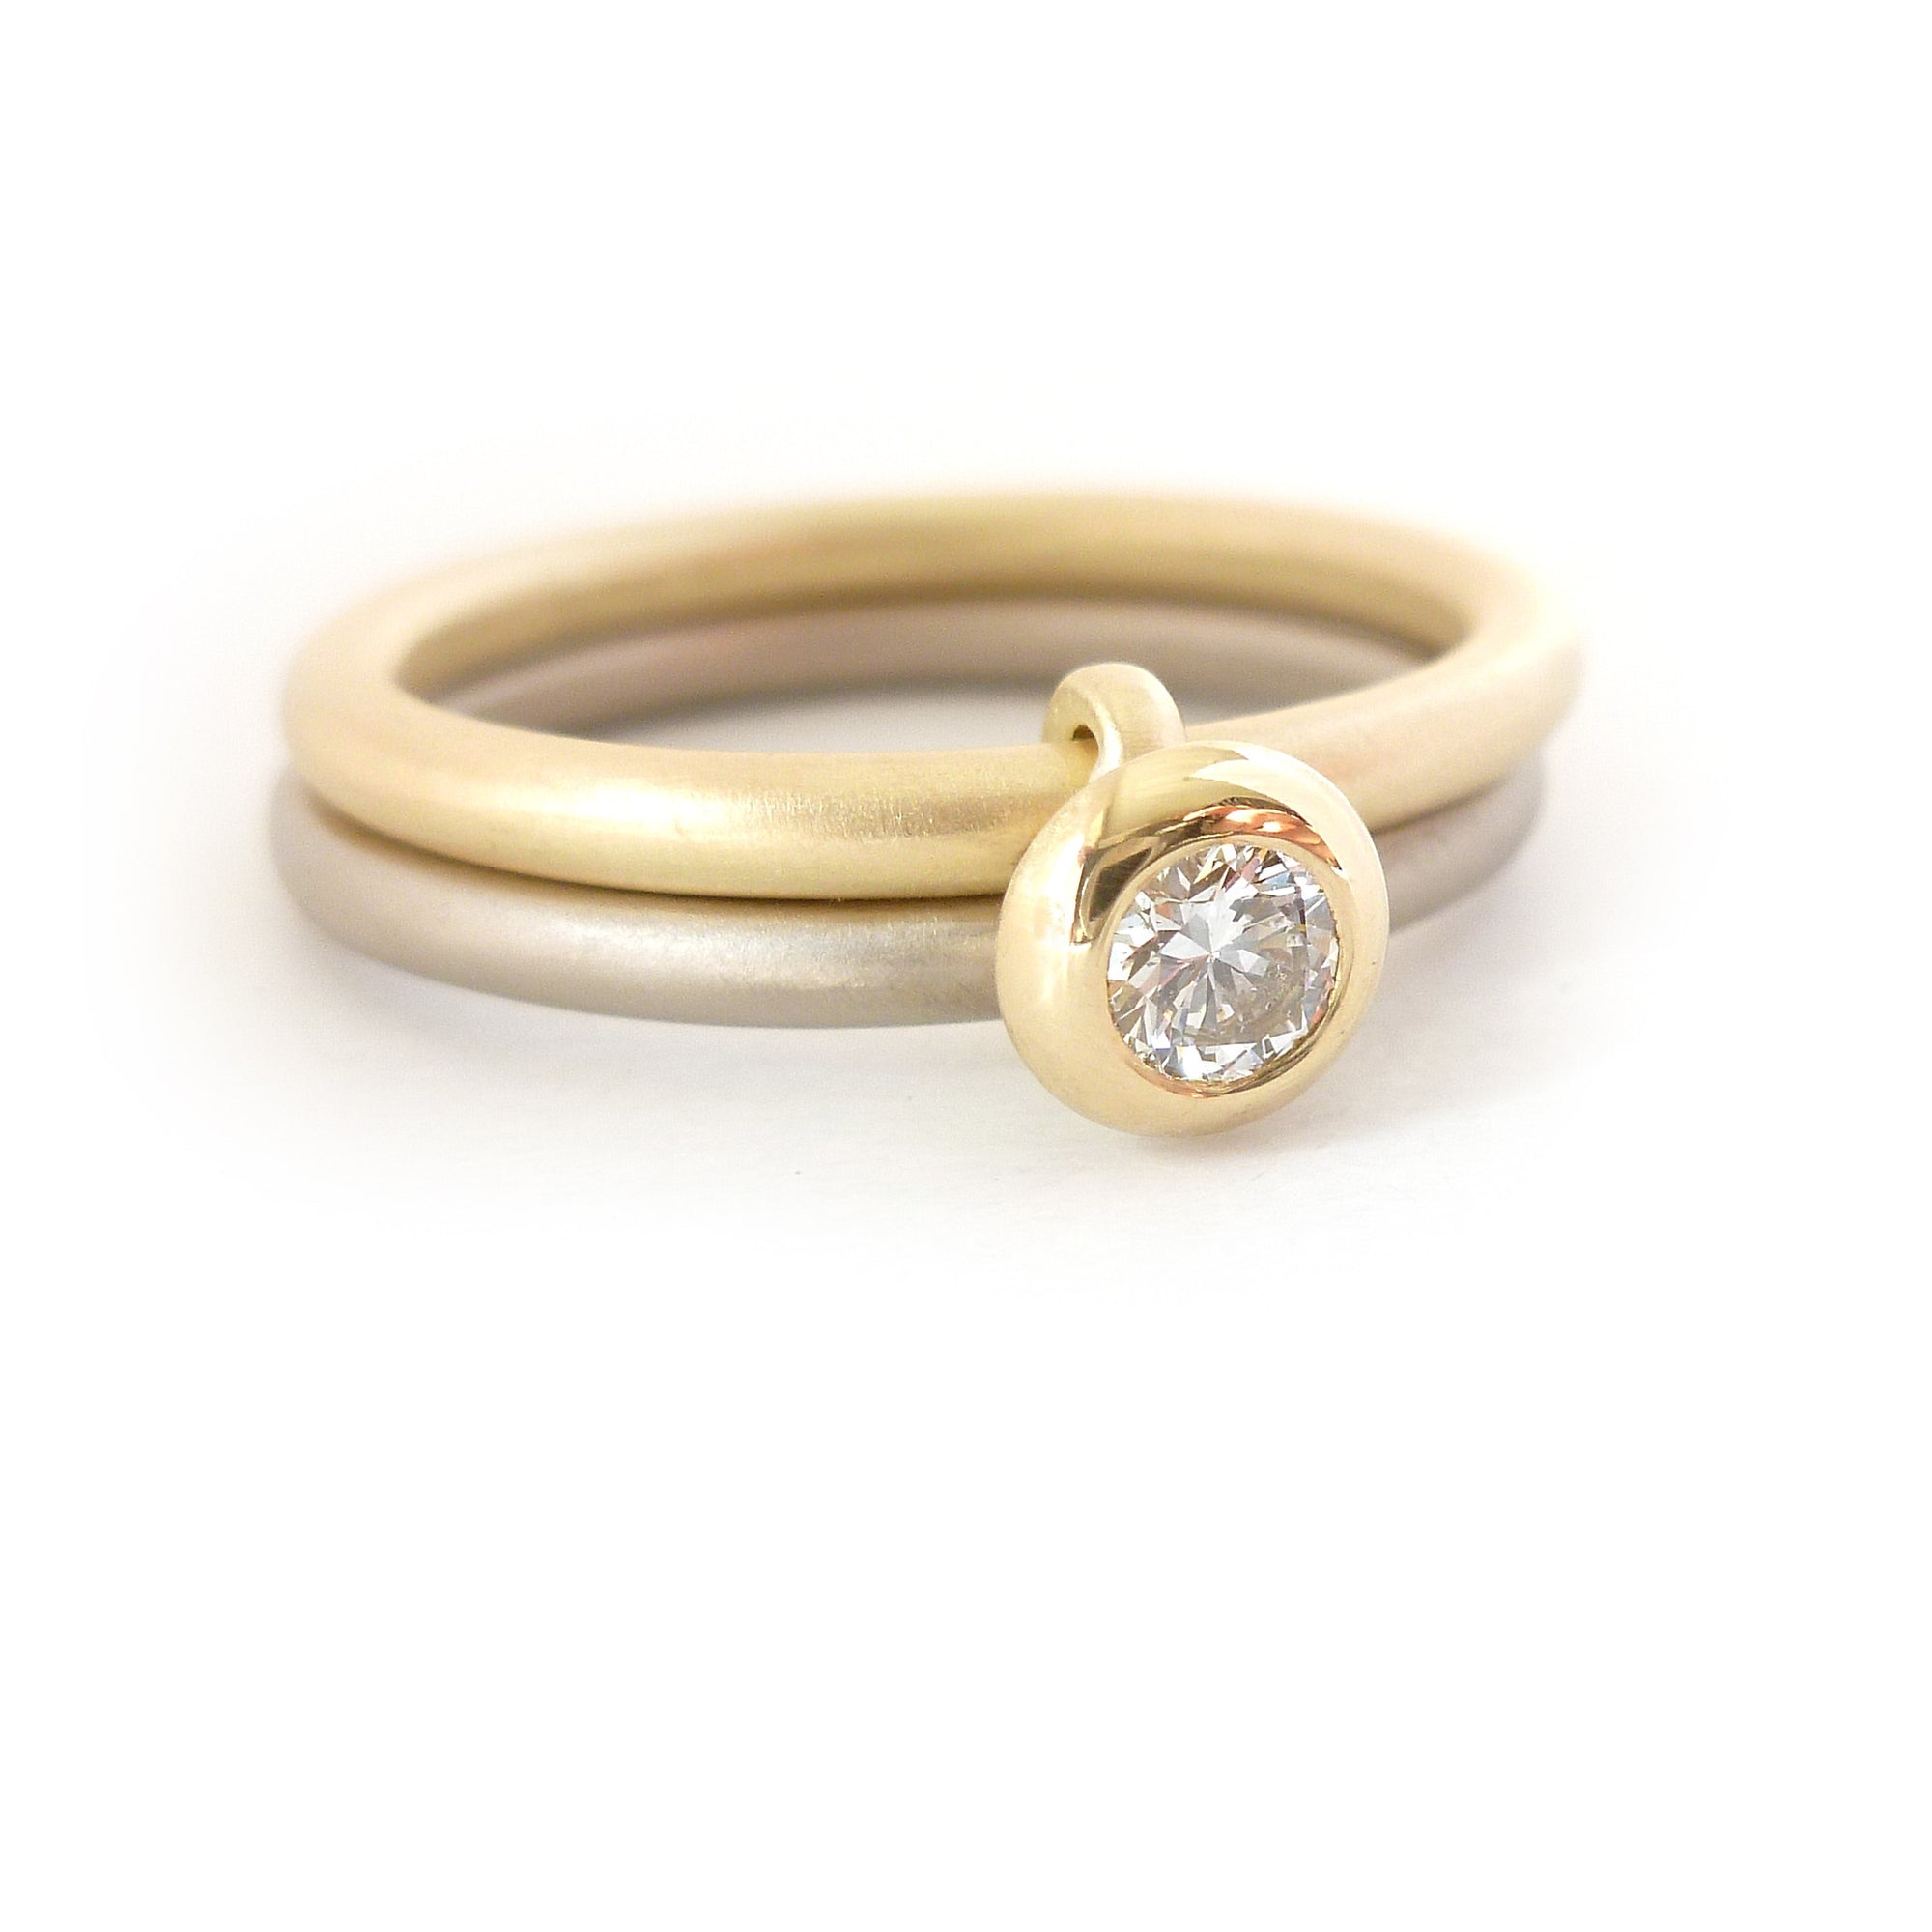 Contemporary, bespoke and modern 18k white and yellow gold two band stacking diamond wedding ring, engagement ring, matt brushed finish. Handmade by Sue Lane UK